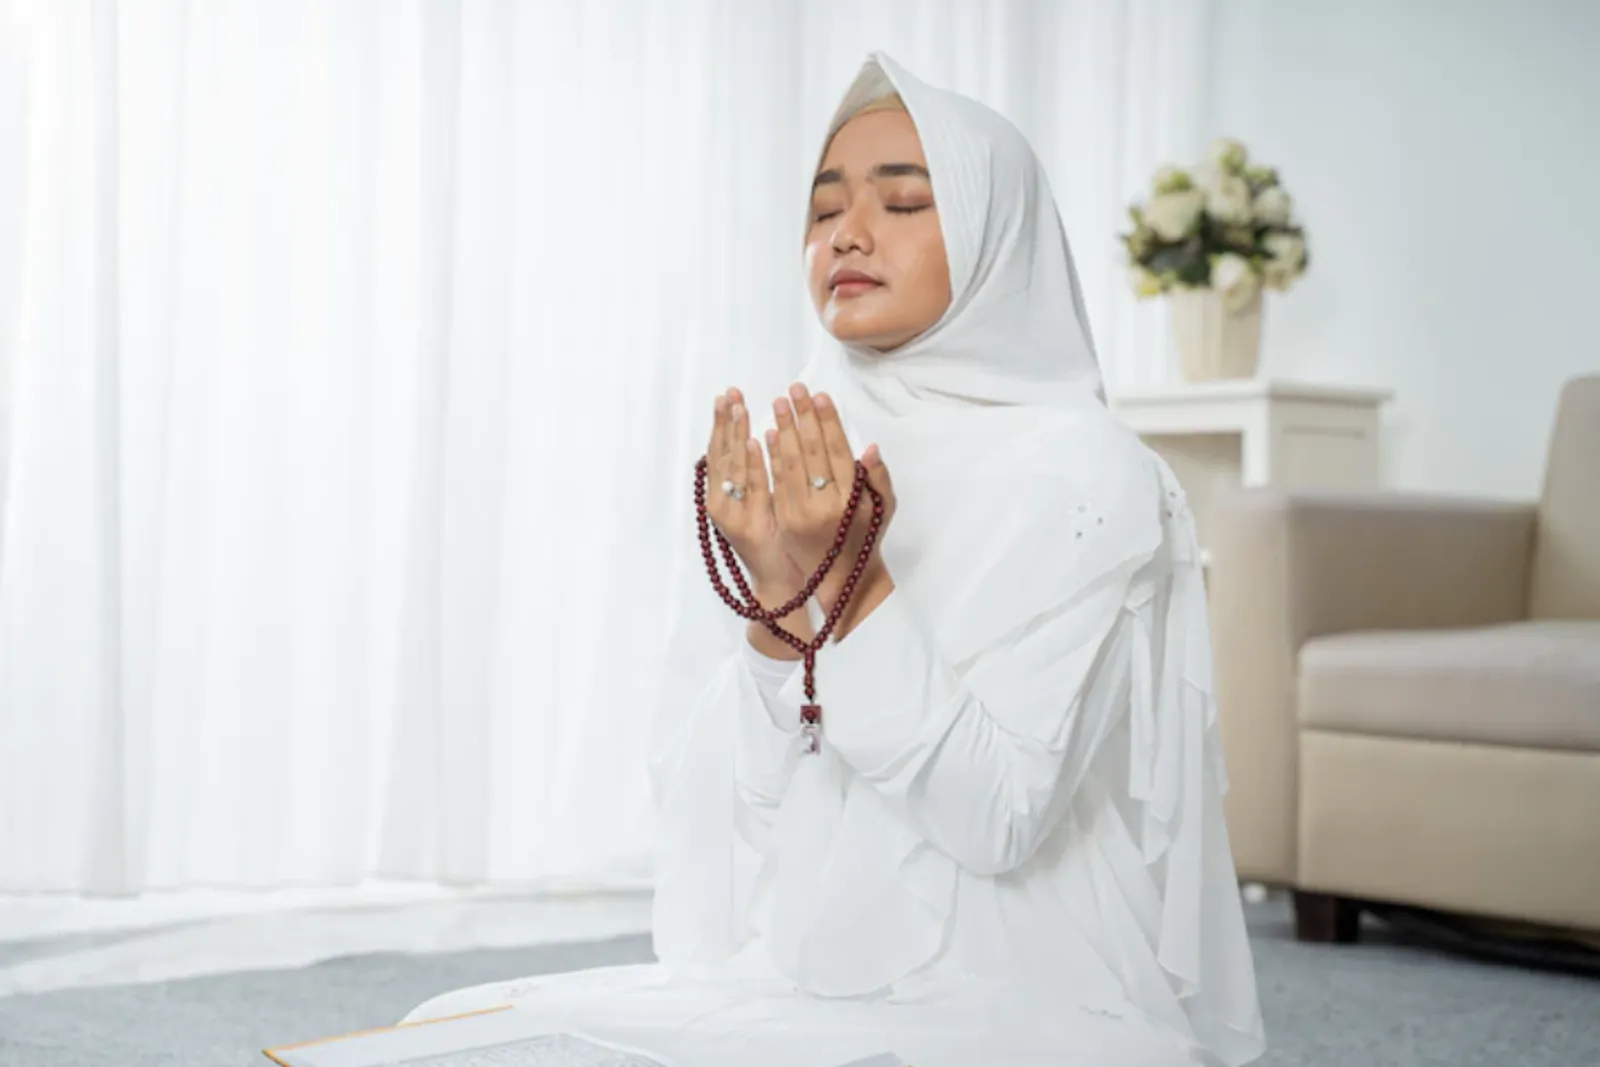 Doa agar ASI Cepat Keluar dan Produksinya Banyak dalam Islam